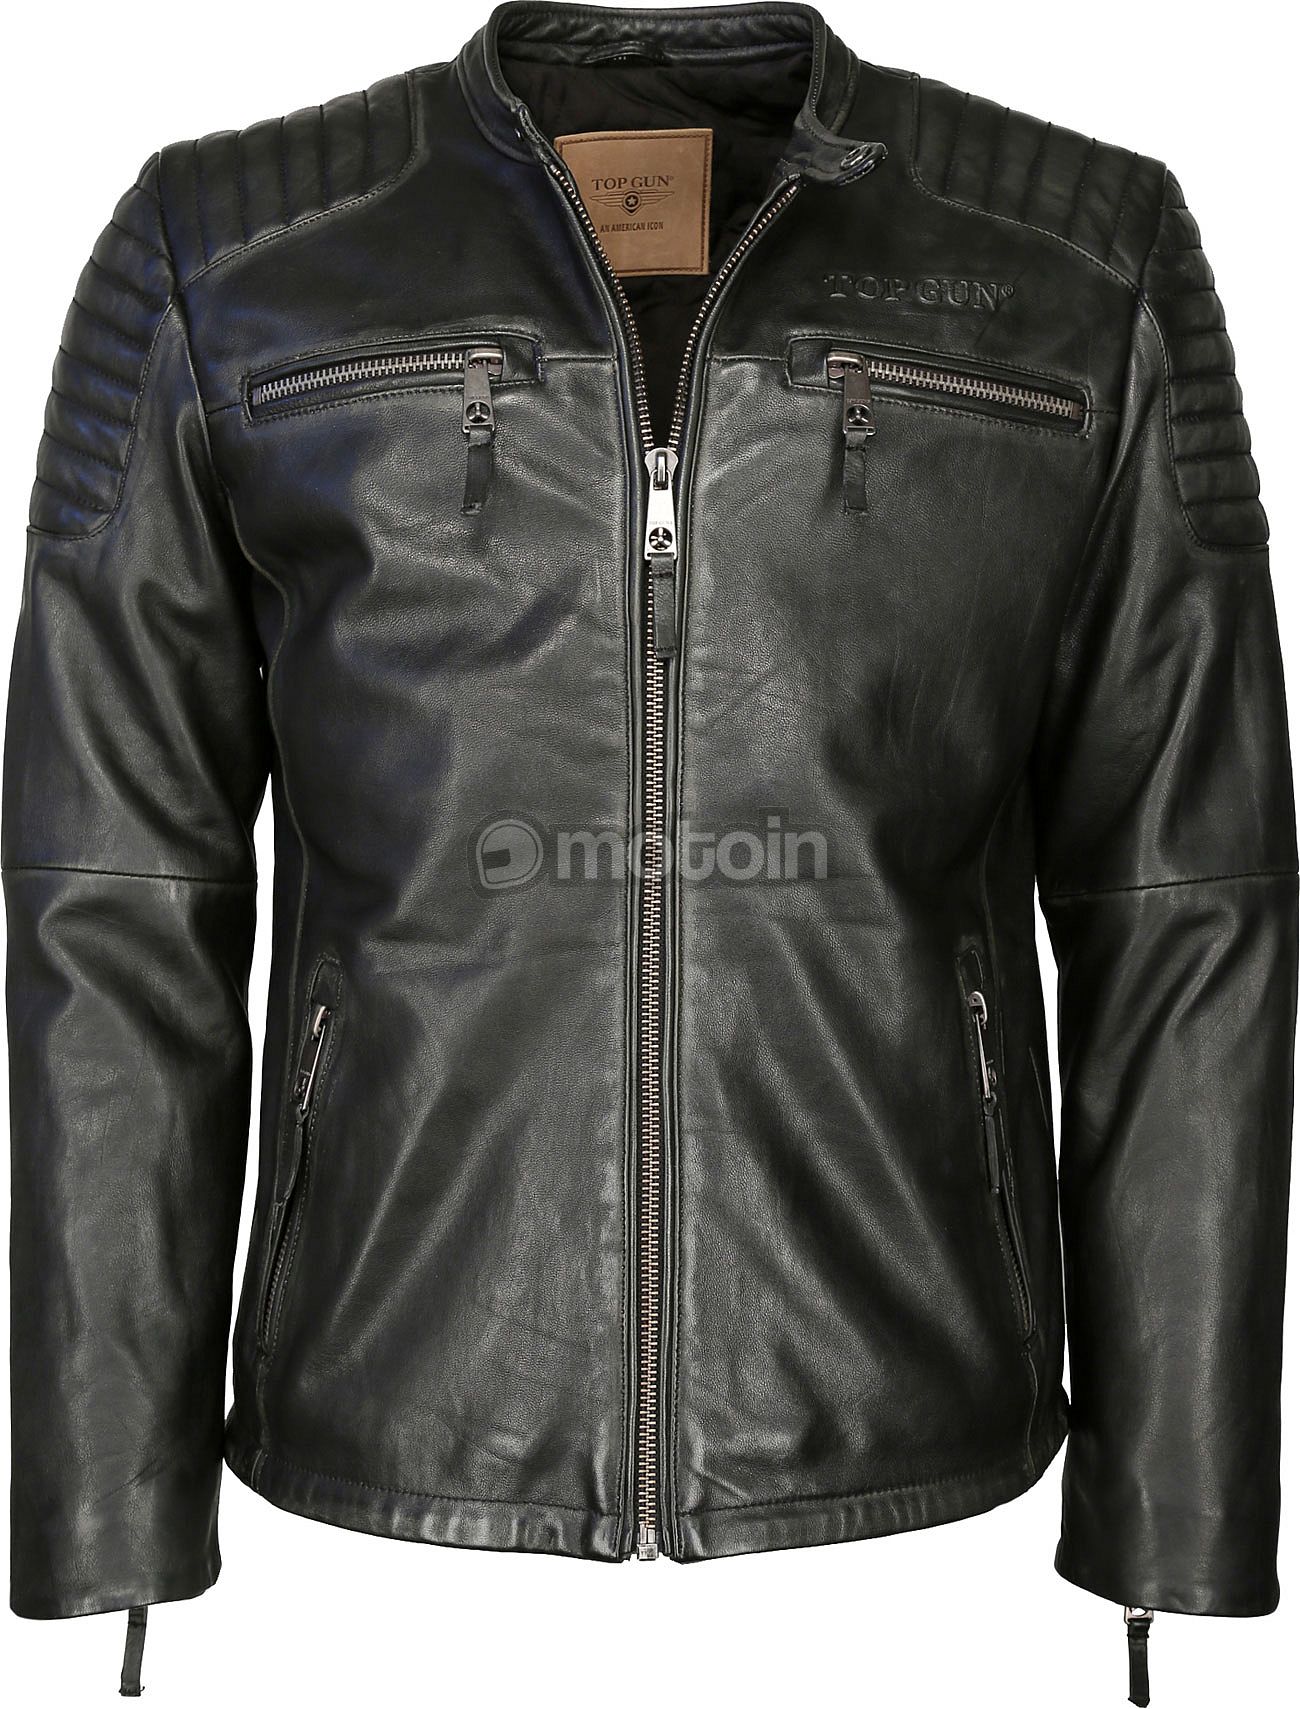 Top Gun Stilo, leather jacket